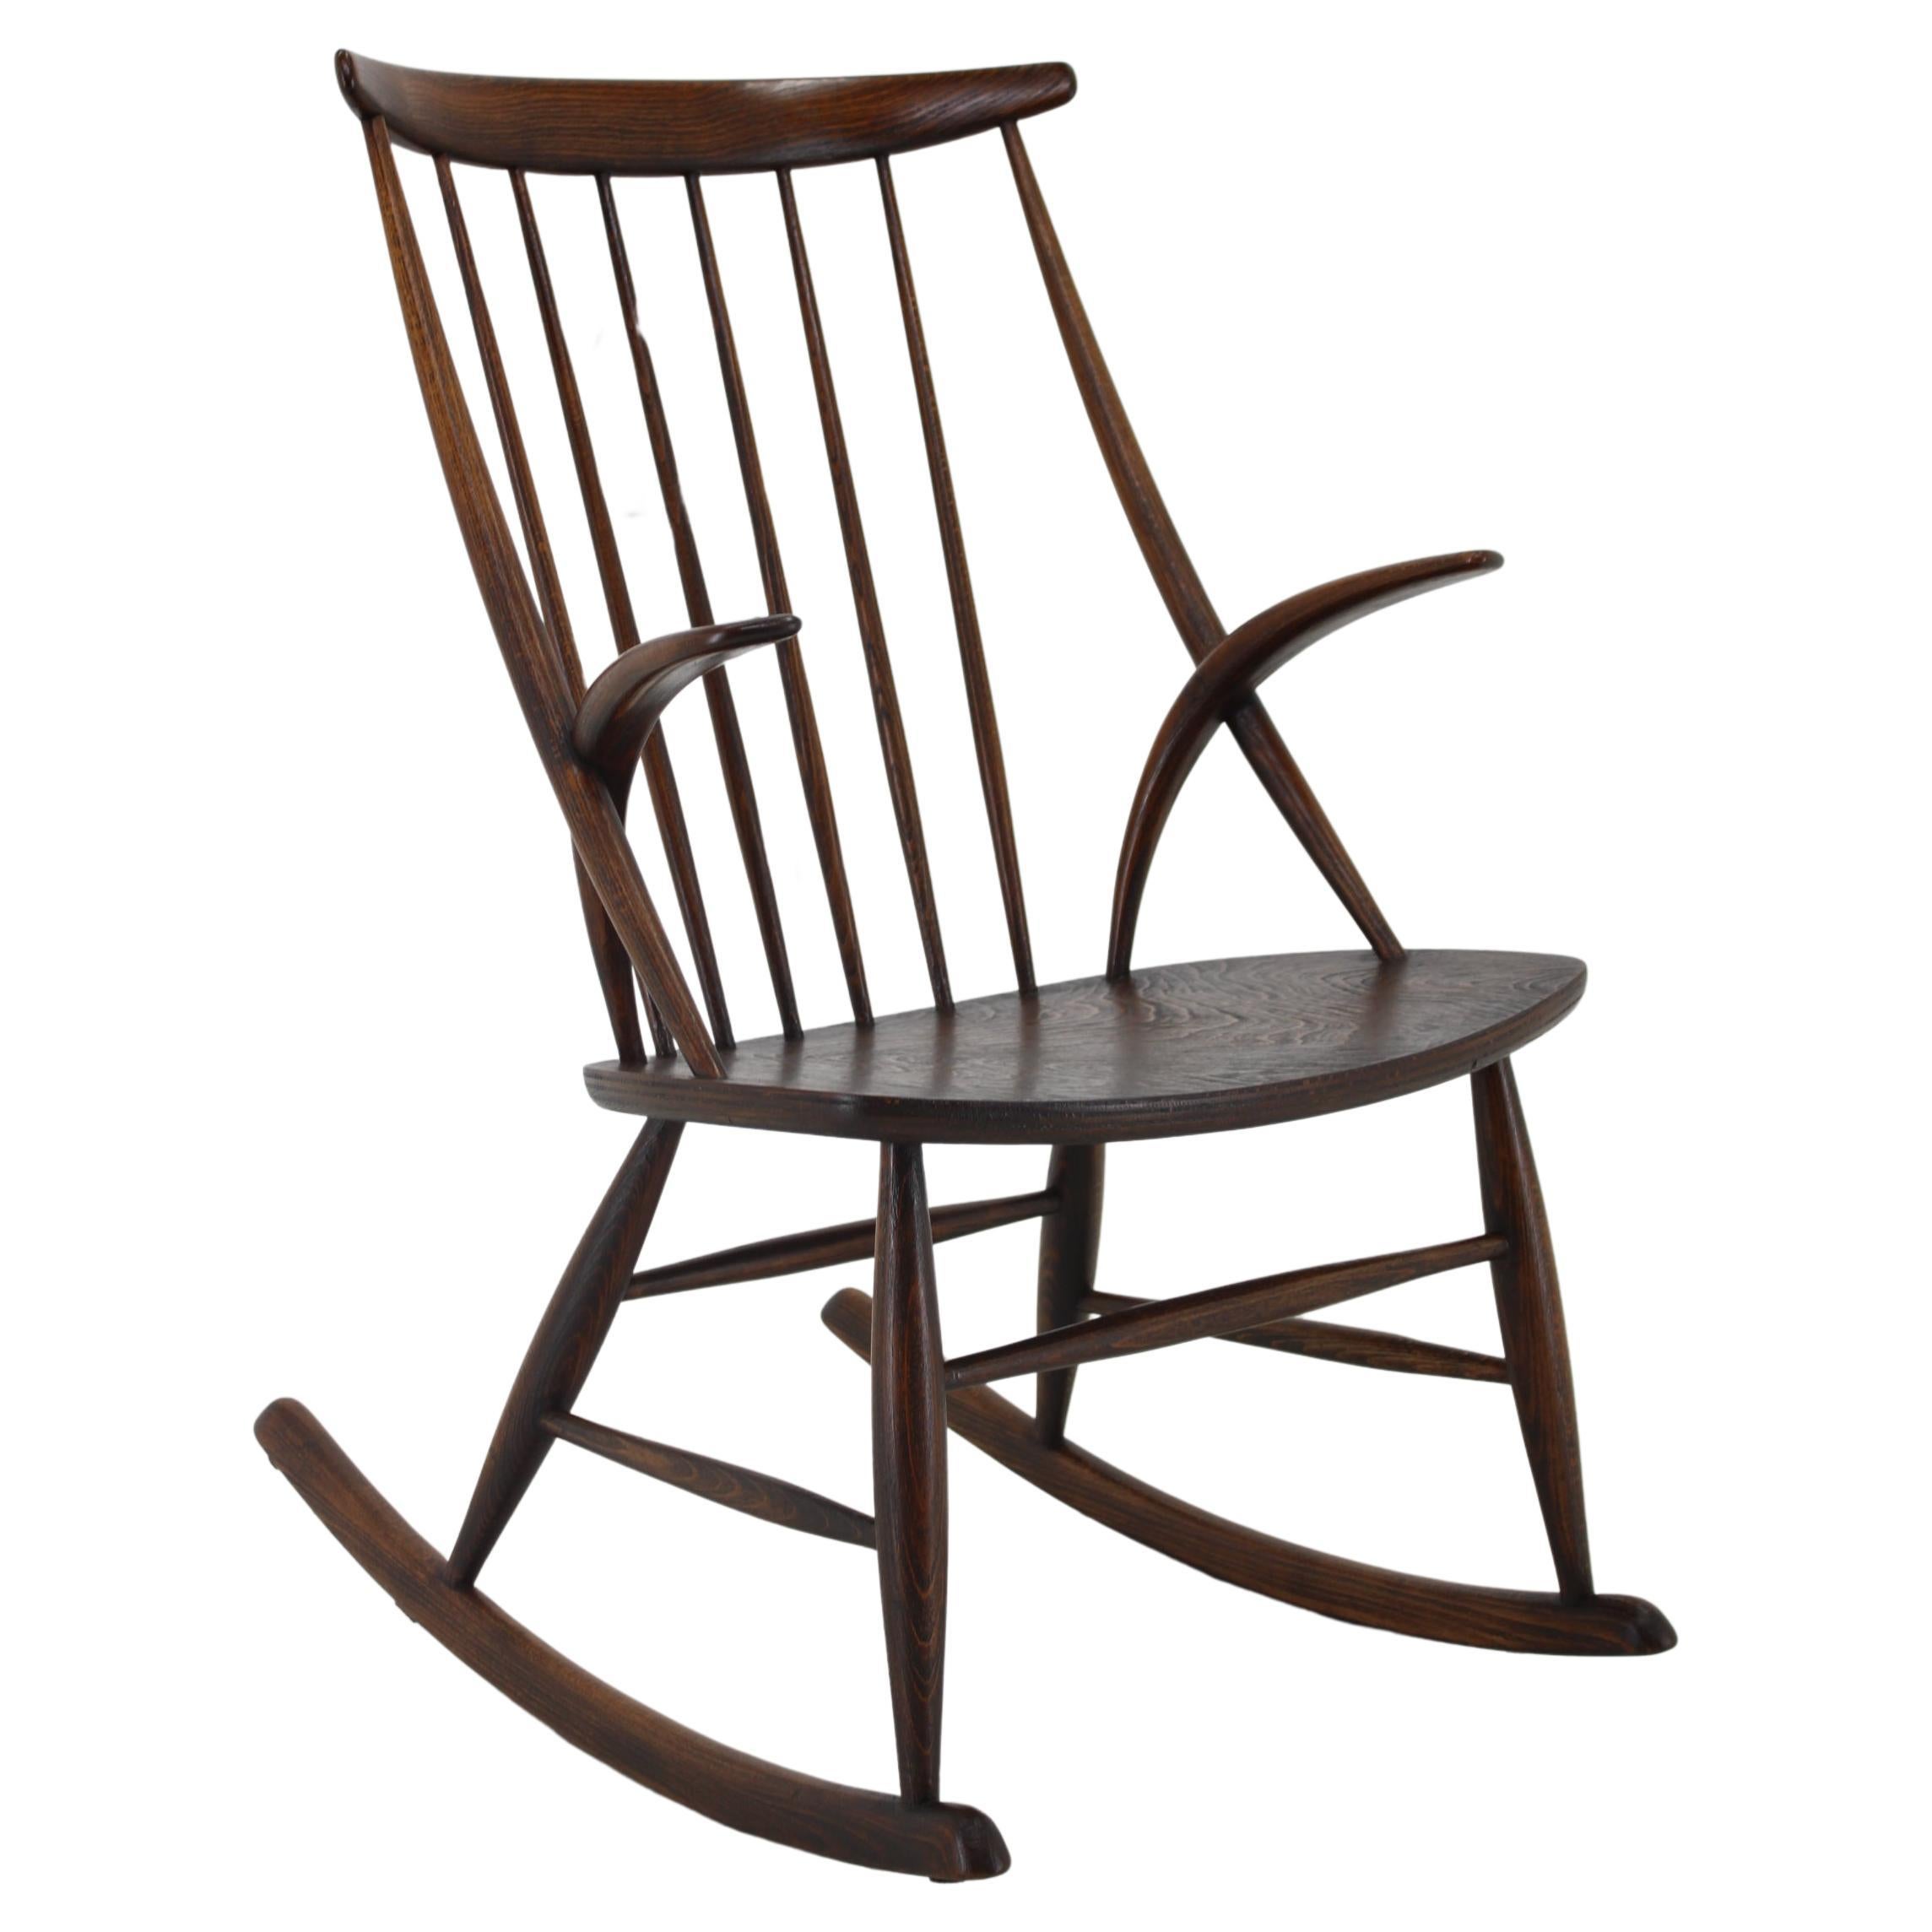 1960s Illum Wikkelso Gyngestol No. 3 Rocking Chair for Niels Eilersen, Denmark For Sale